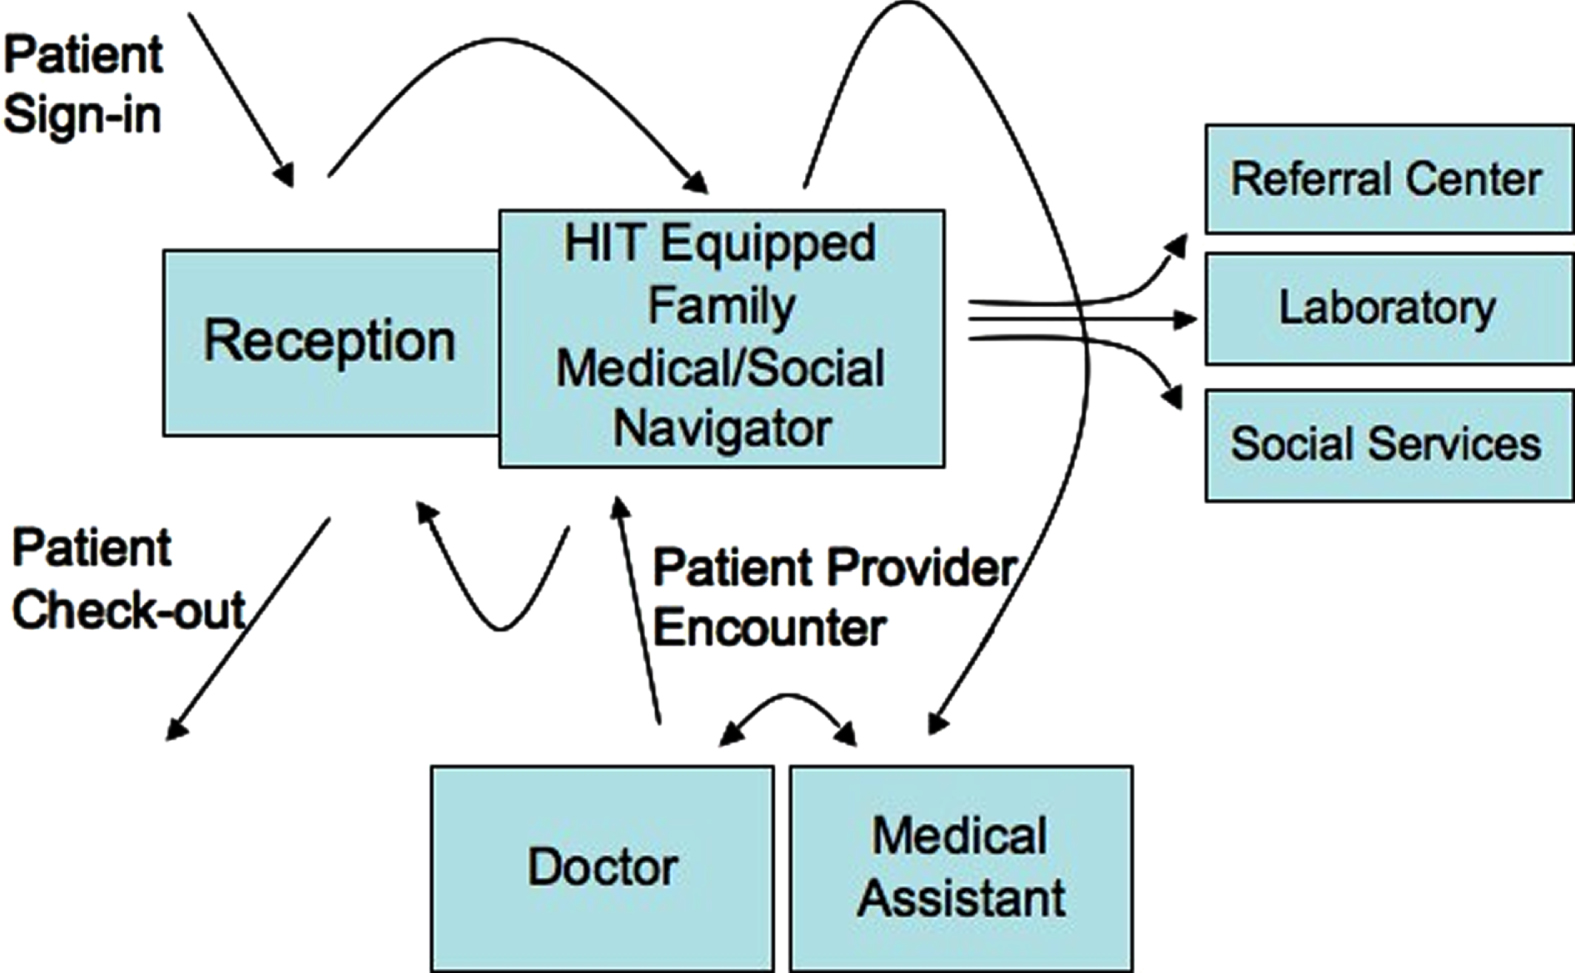 PCCMT-based care process: A patient-centric care model.